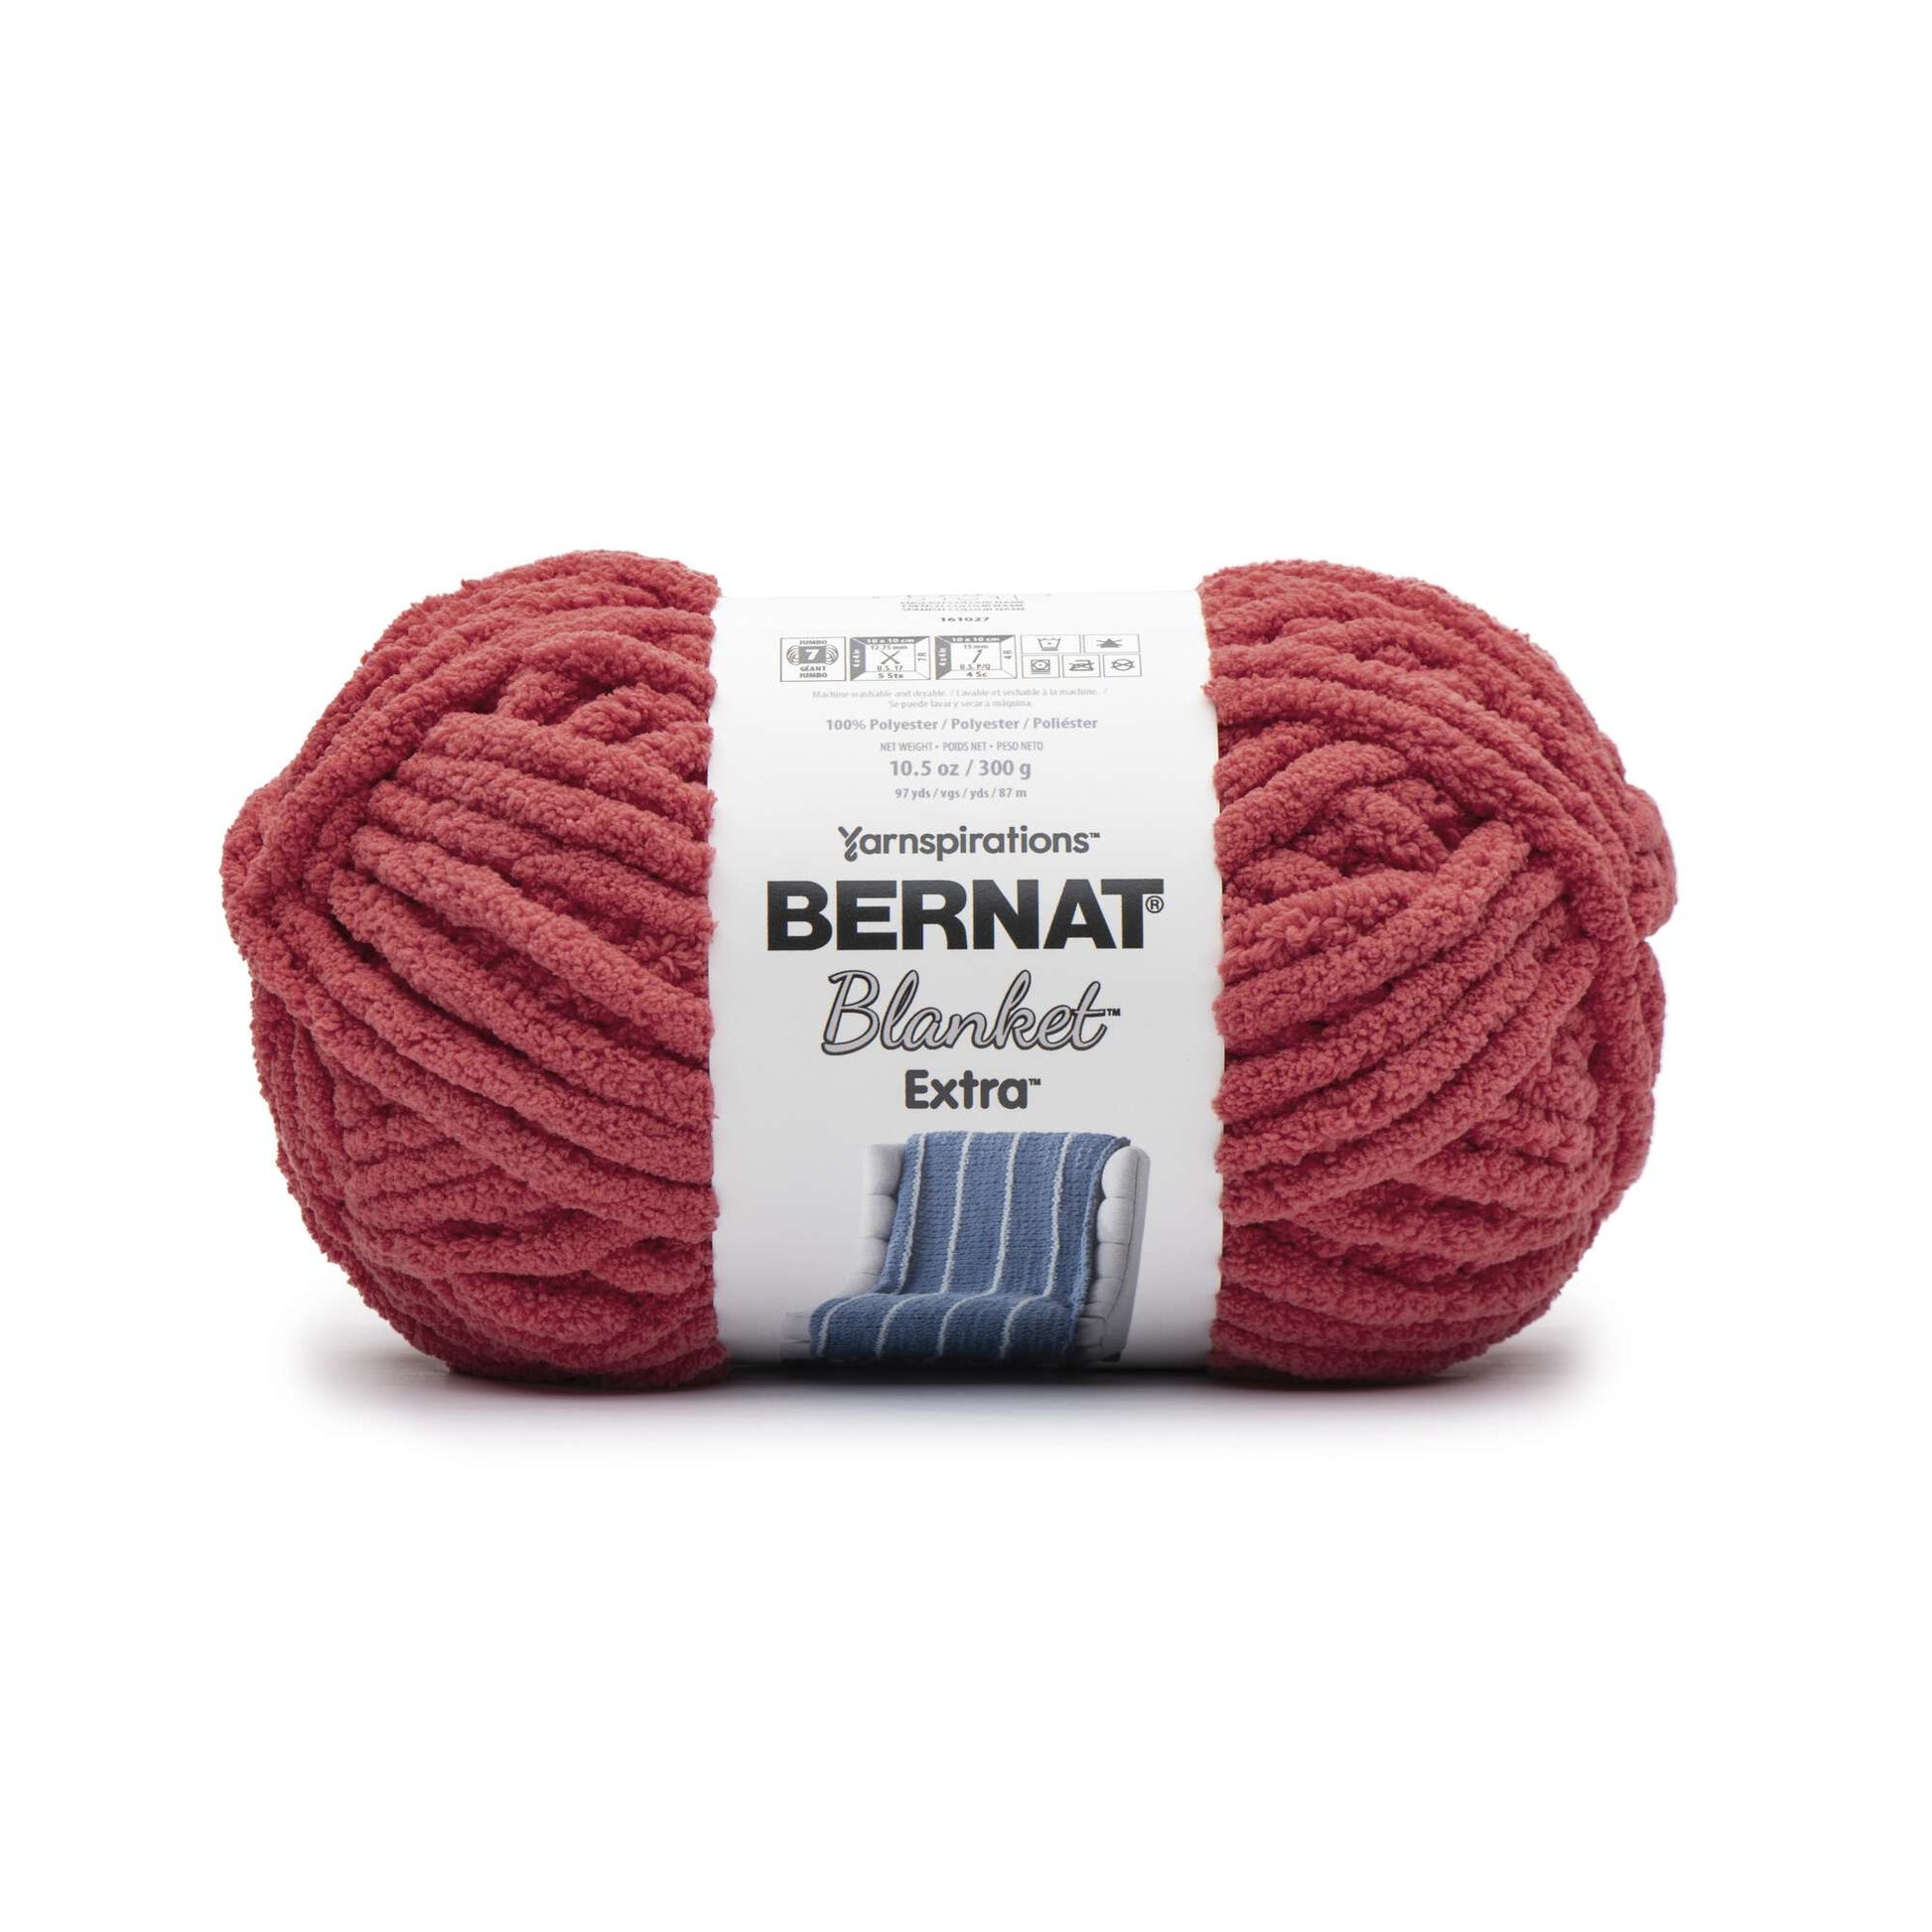 Bernat Blanket Extra Yarn (300g/10.5oz) - Clearance Shades* Really Red